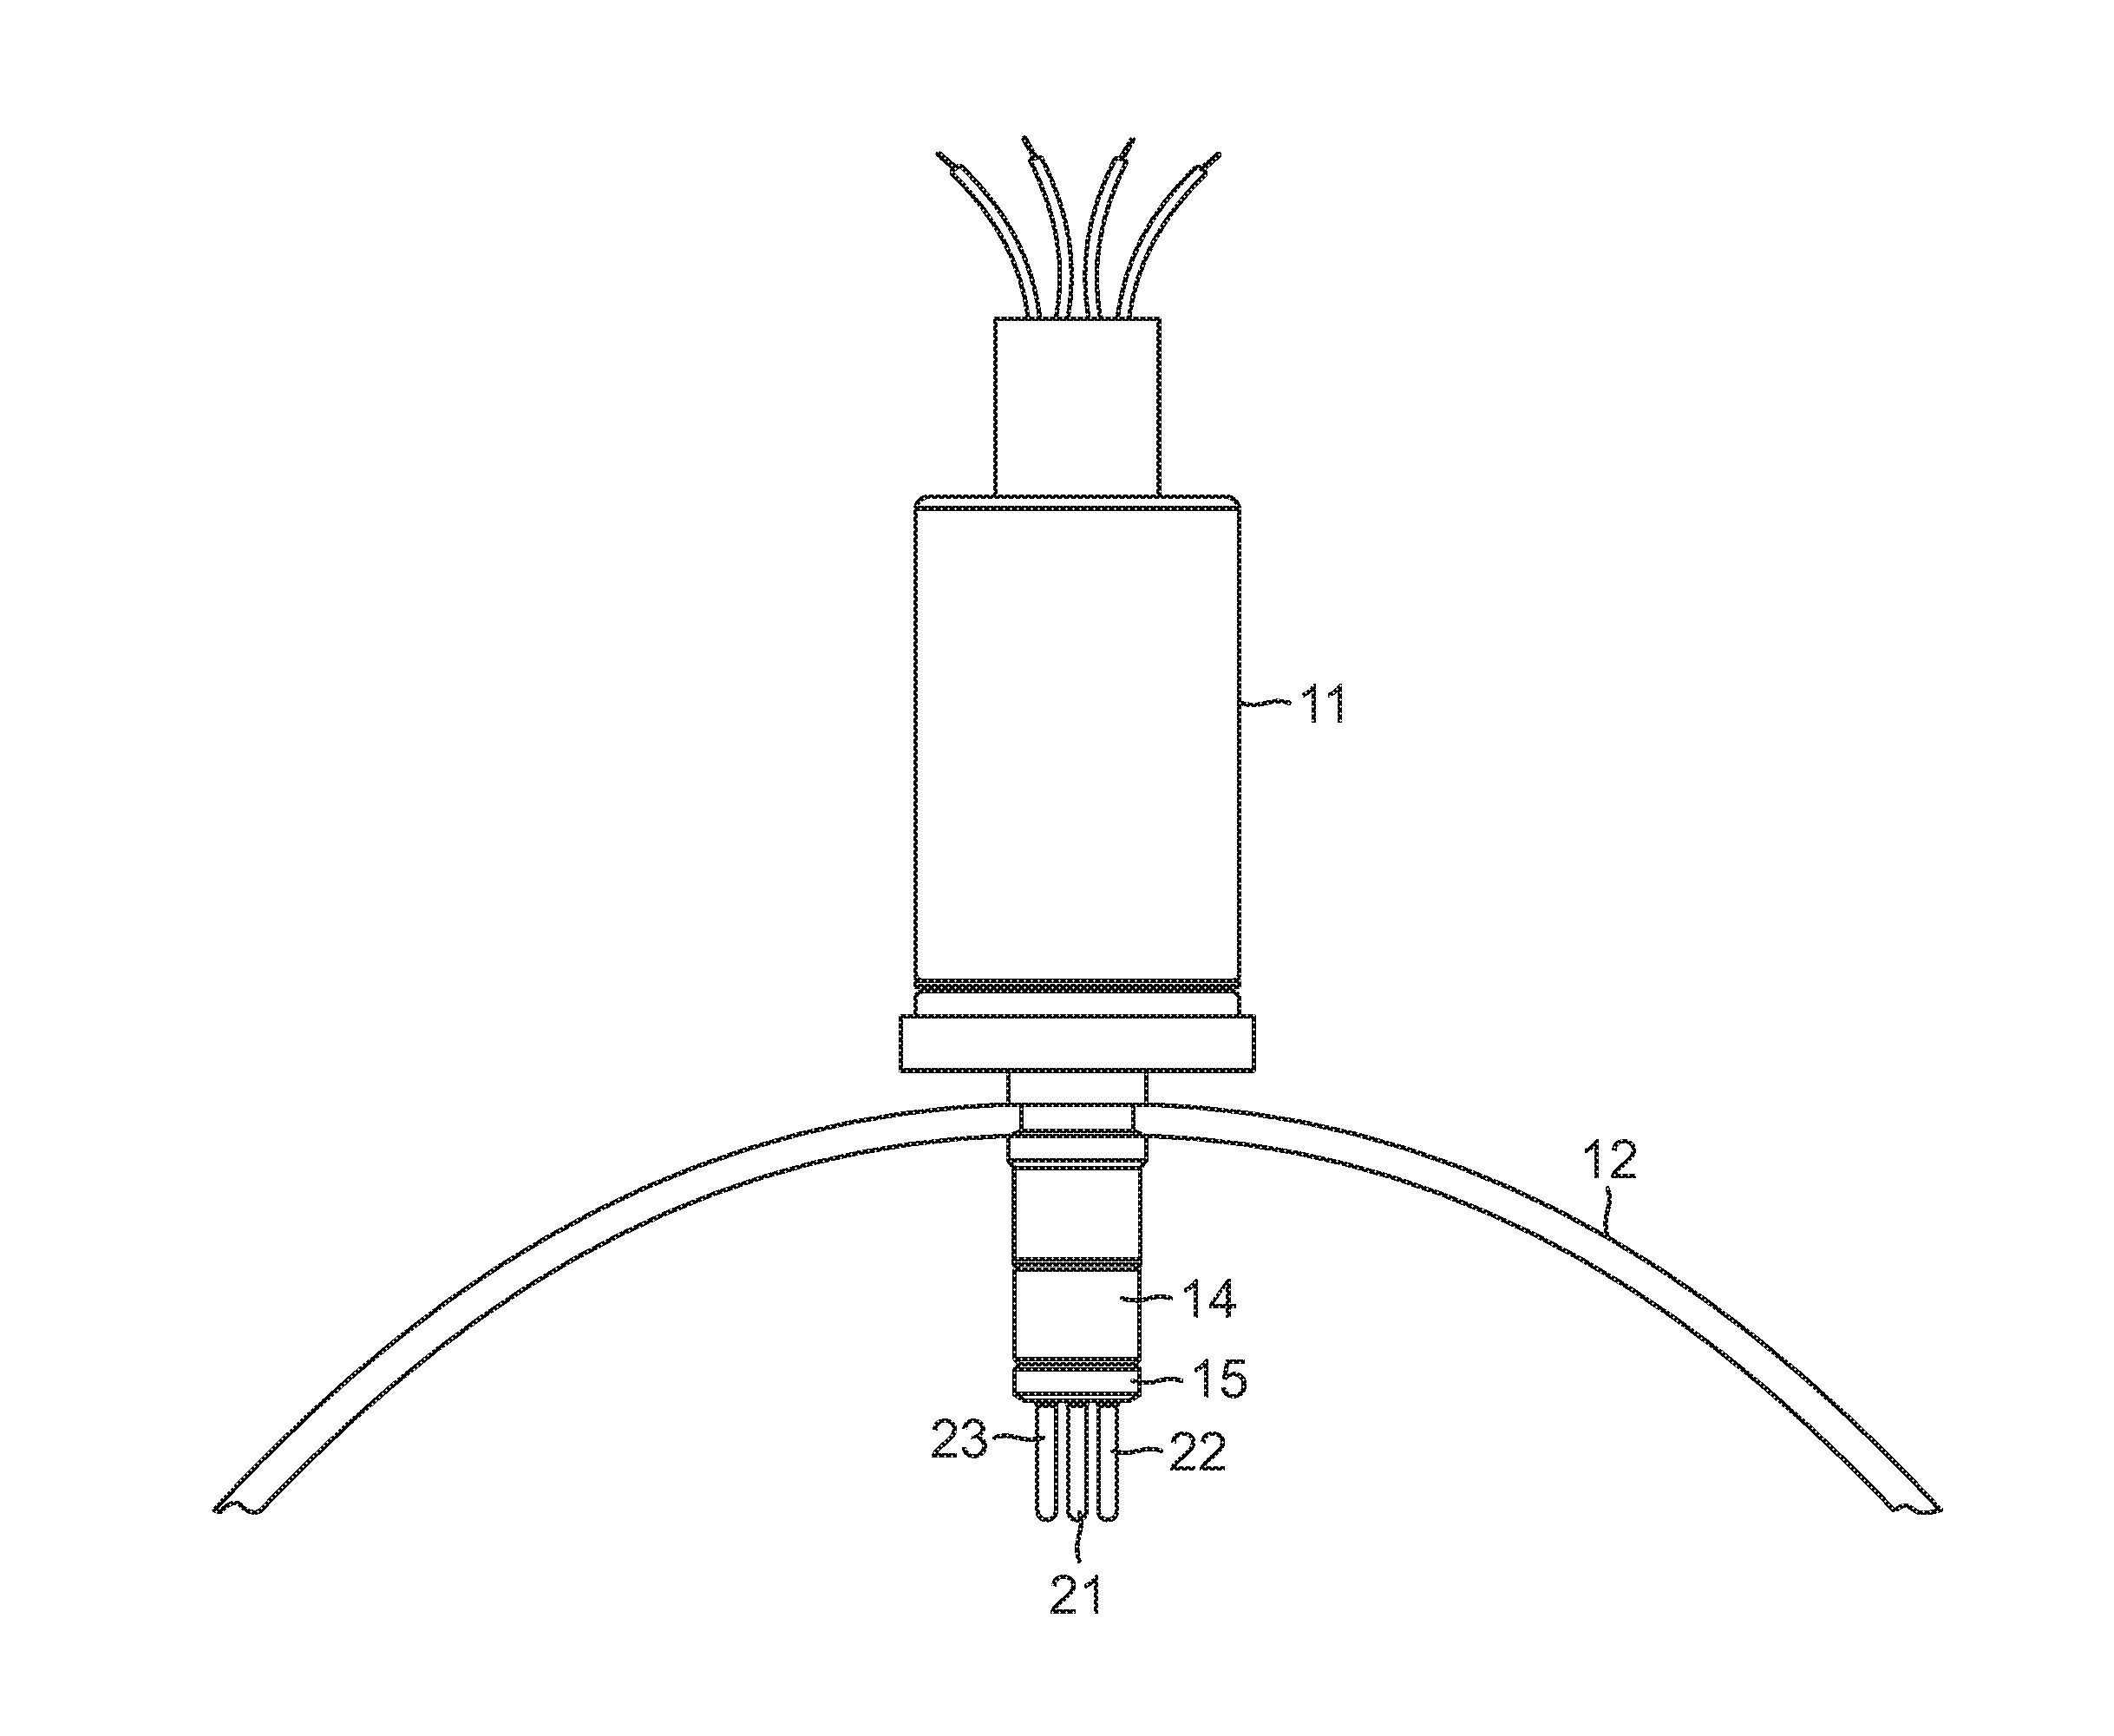 Dual sensor head configuration in a fluid flow or liquid level switch